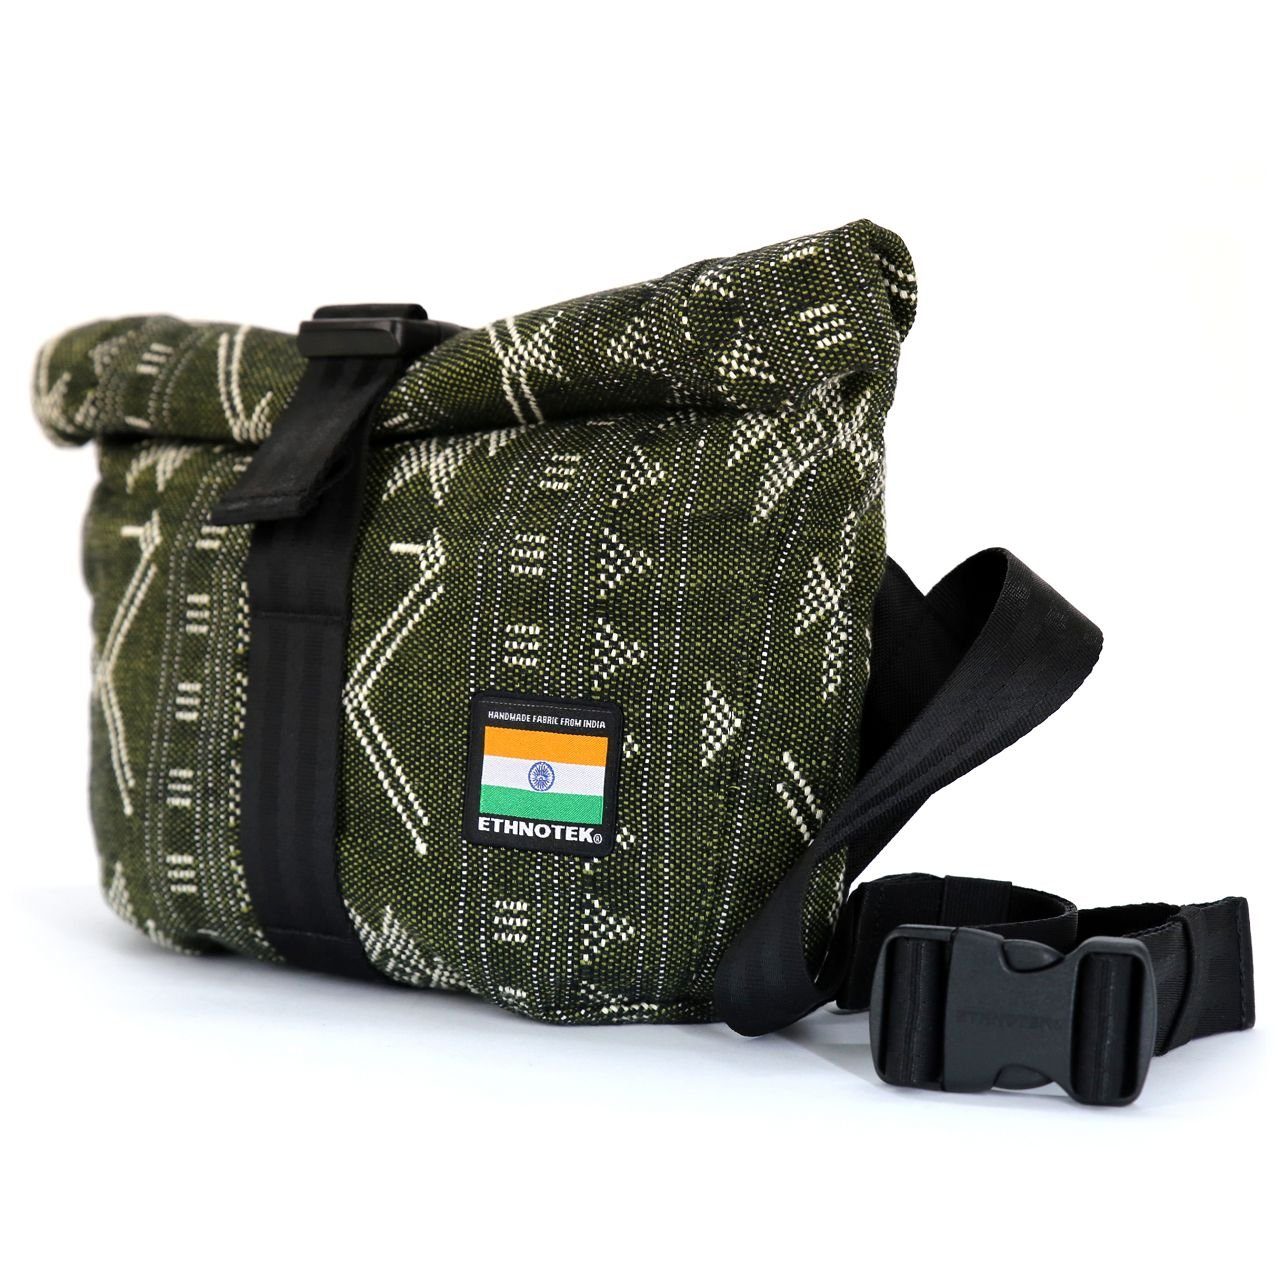 India 19 Sling Bag Messenger Cyclo Umhängetasche Ethnotek Classic